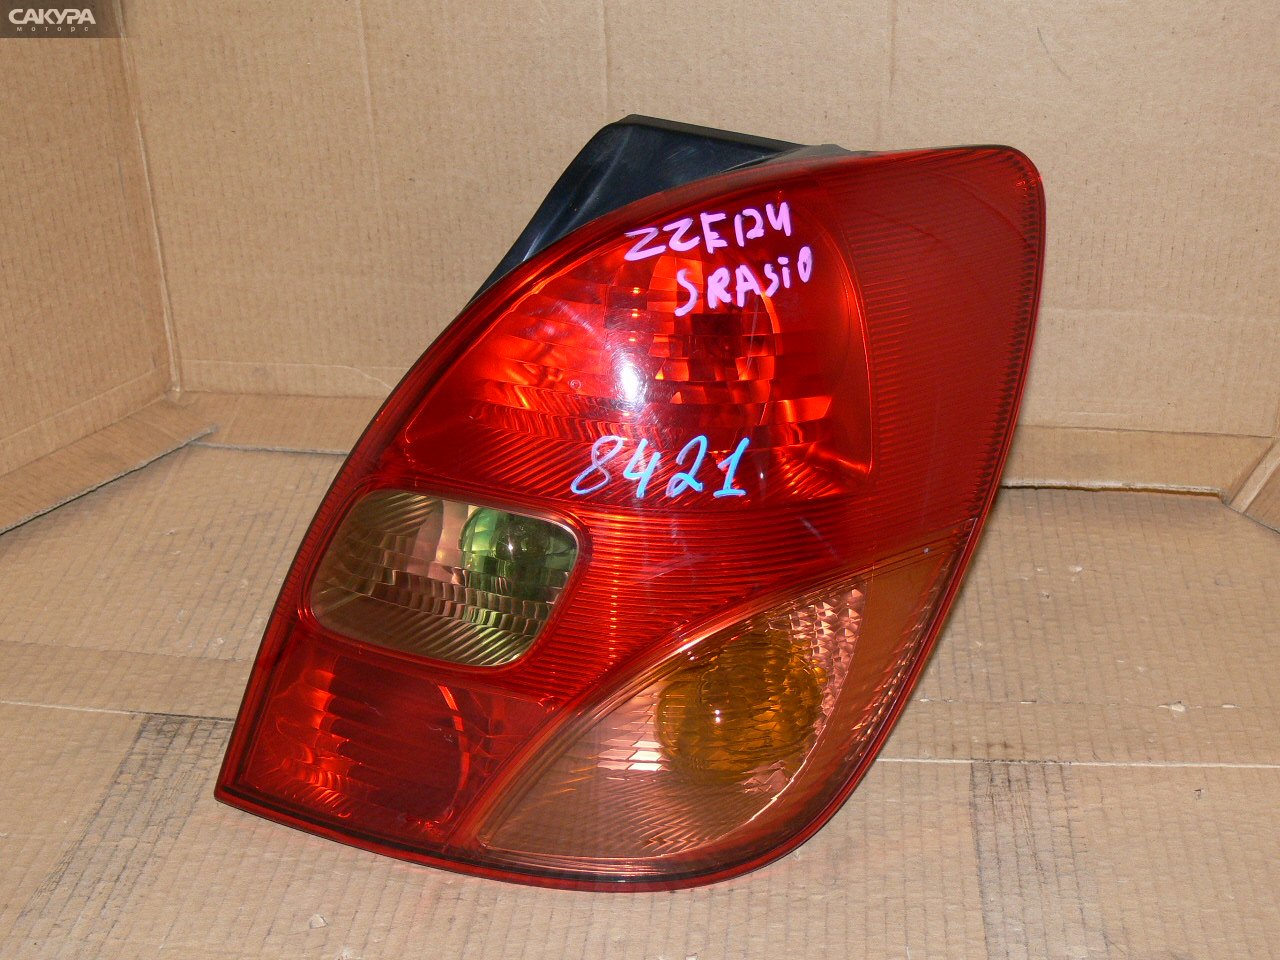 Фонарь стоп-сигнала правый Toyota Corolla Spacio ZZE124N 13-69: купить в Сакура Иркутск.